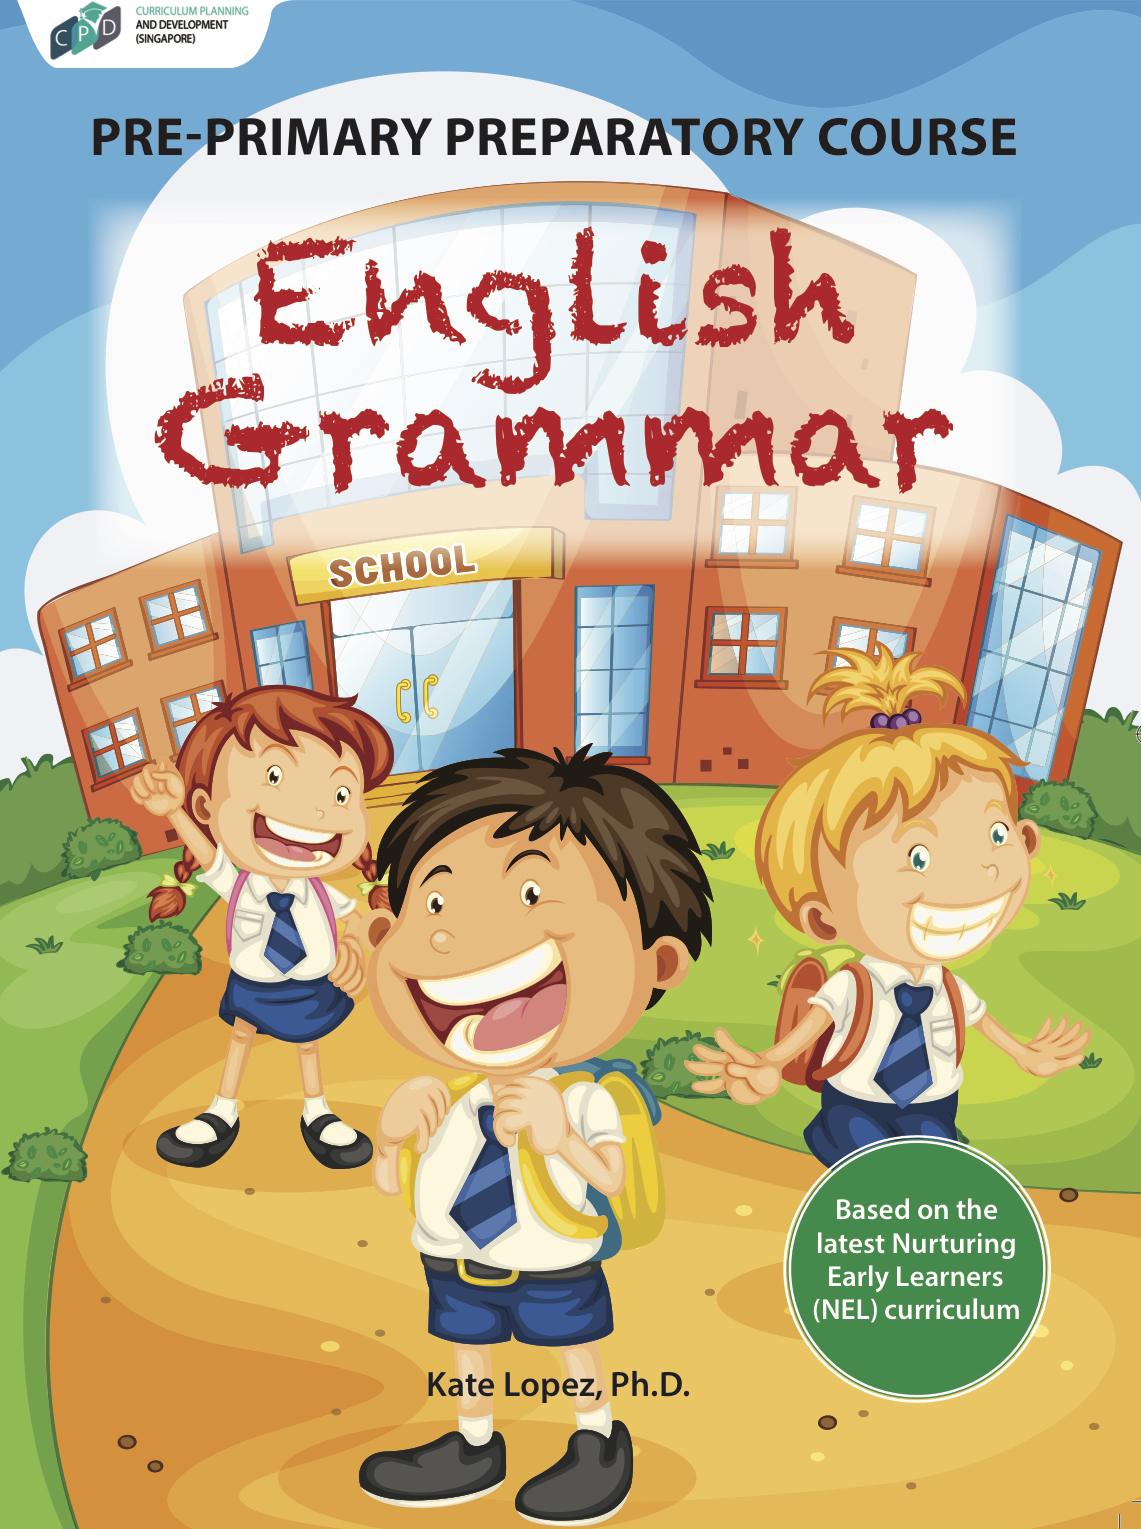 teaching grammar in preschool and primary education